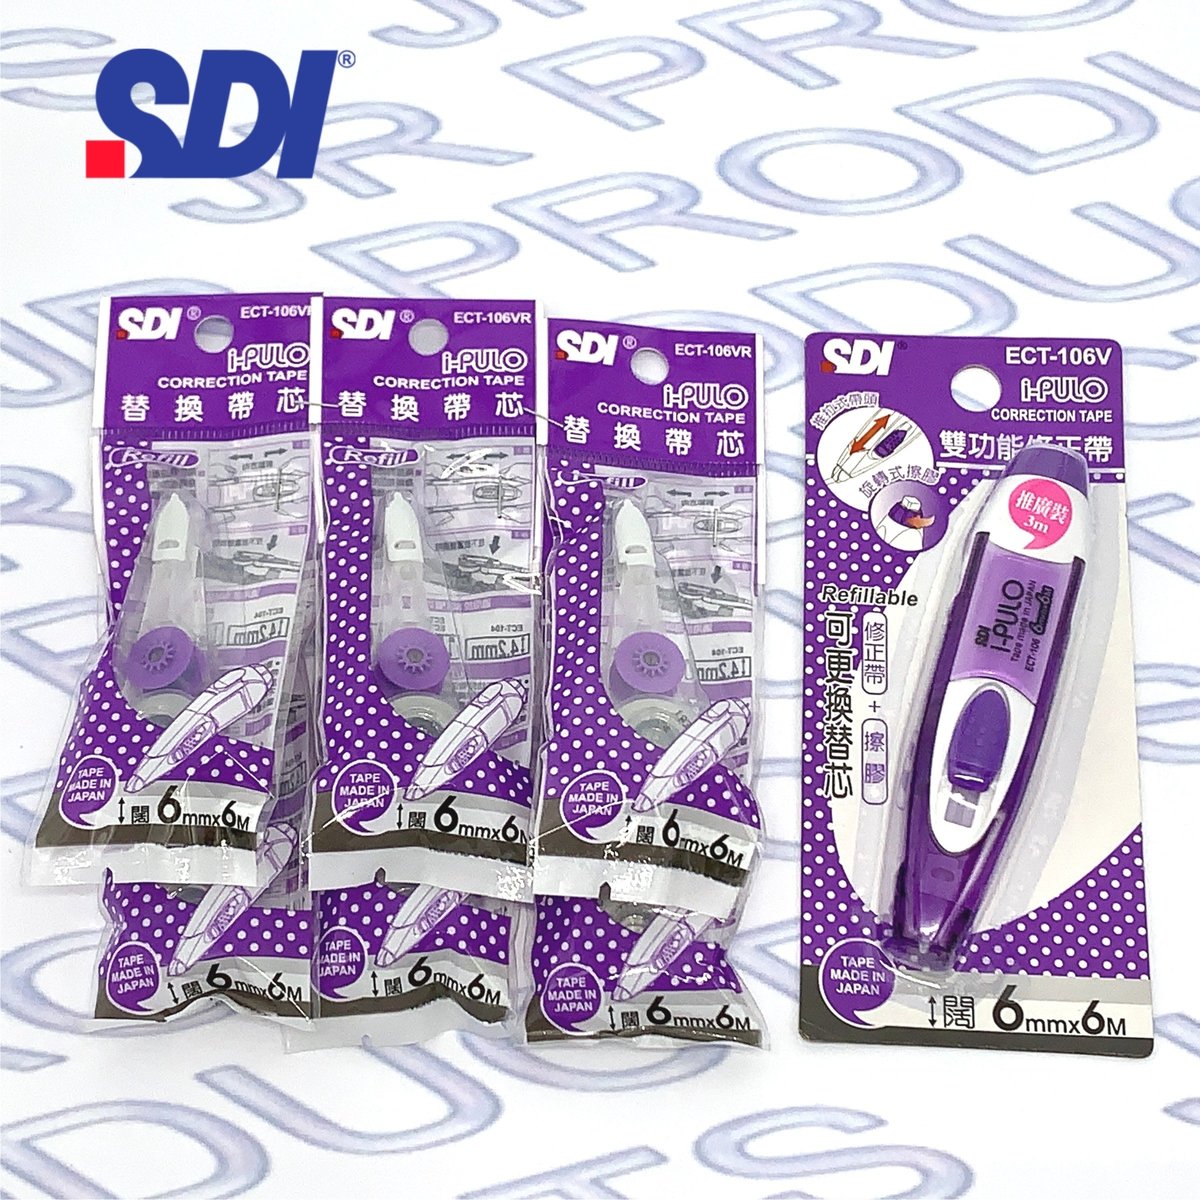 Purple SDI i-PULO ECT-105V  2-Way Eraser & Correction Tape 5mm x 6 M 